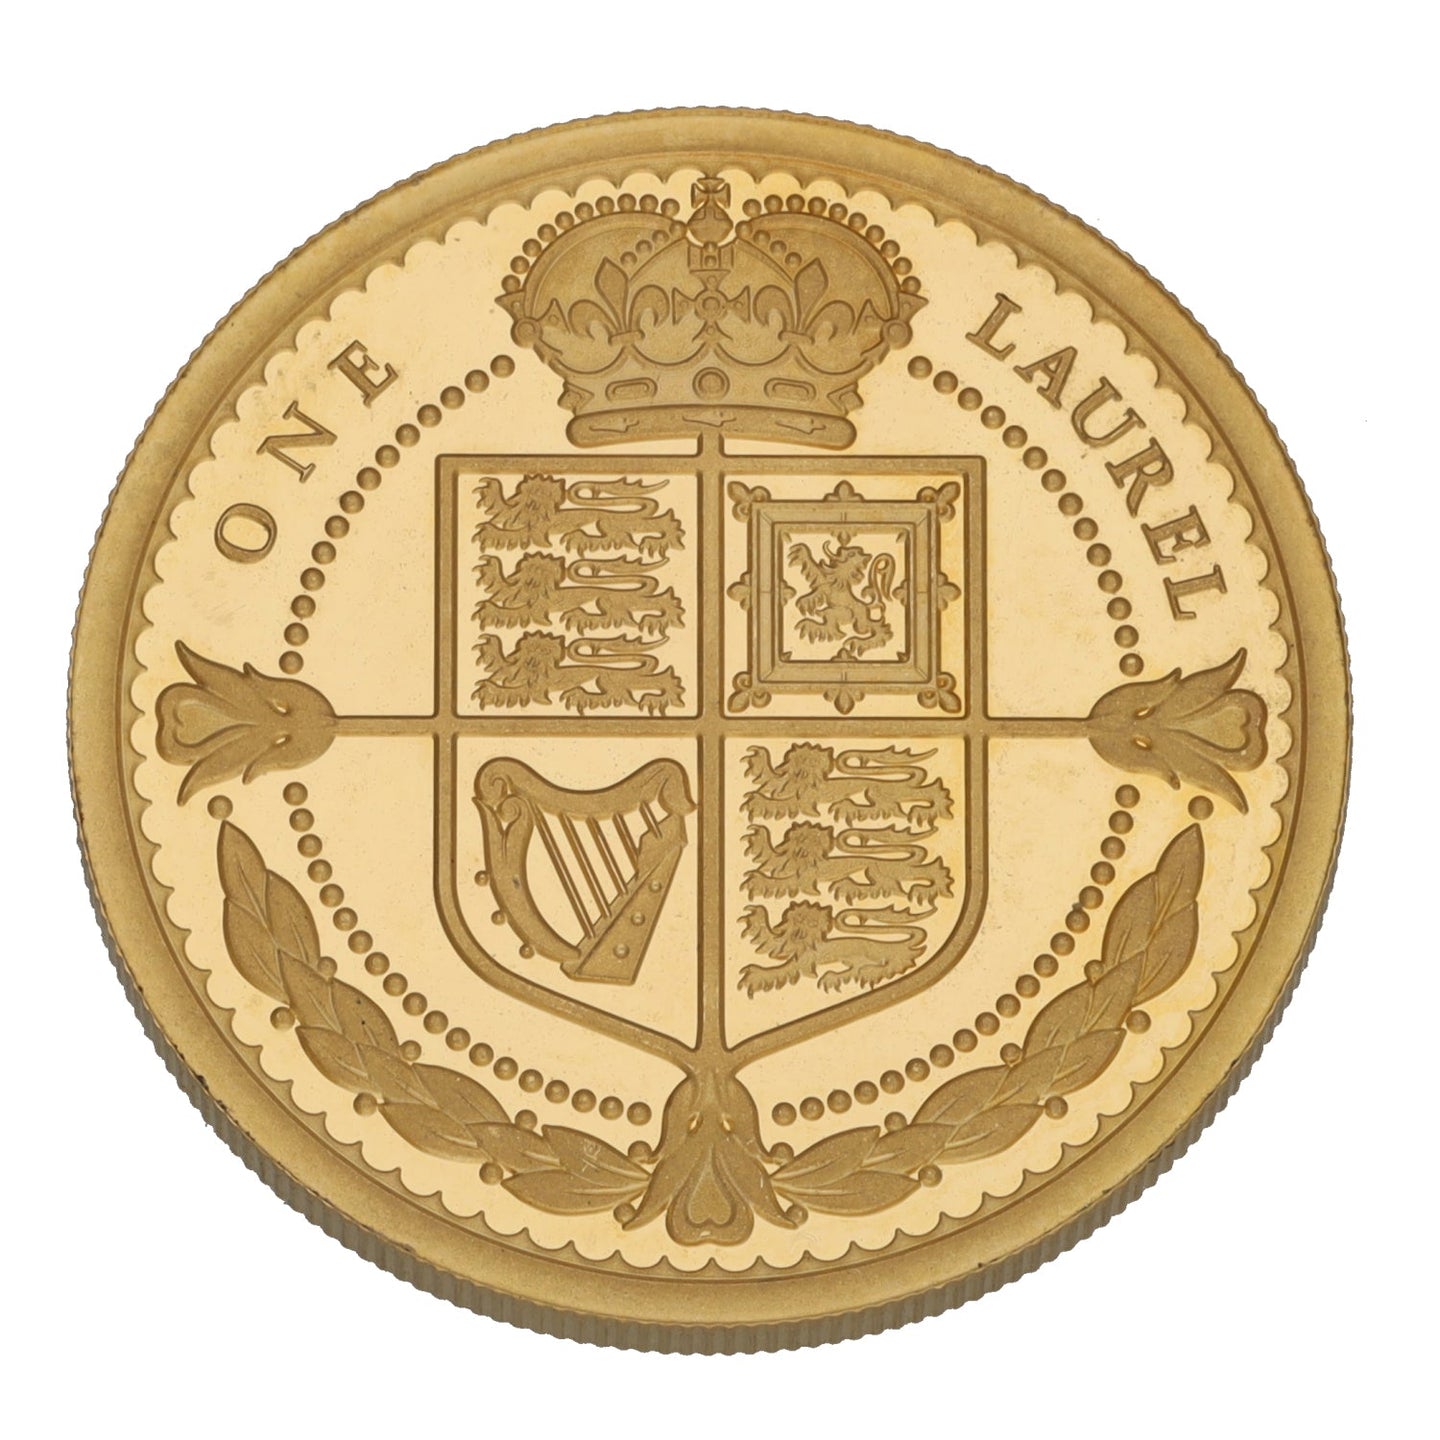 22ct Gold Queen II Tristan Da Cunha One Laurel Coin 2019